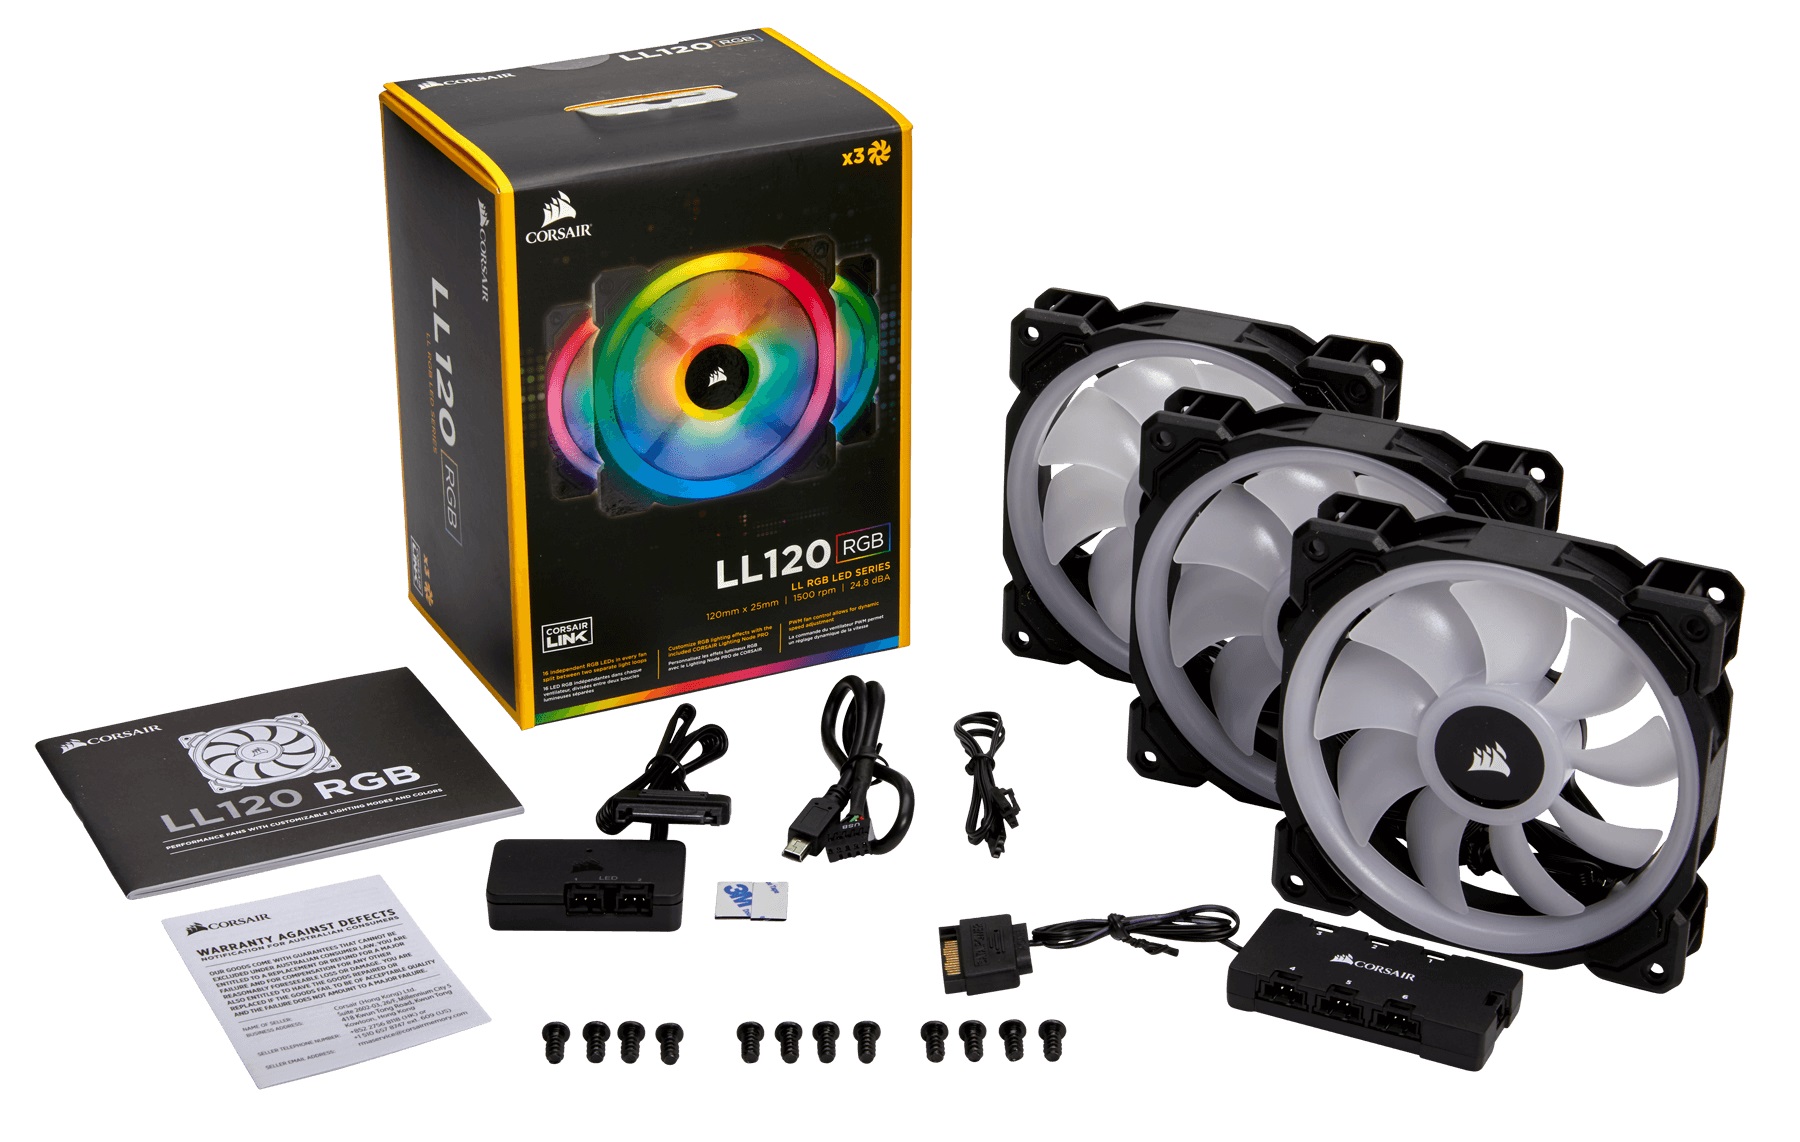 Fan LL120 RGB 120mm Dual Light Loop RGB LED PWM - 3 Fan Pack with Lighting Node